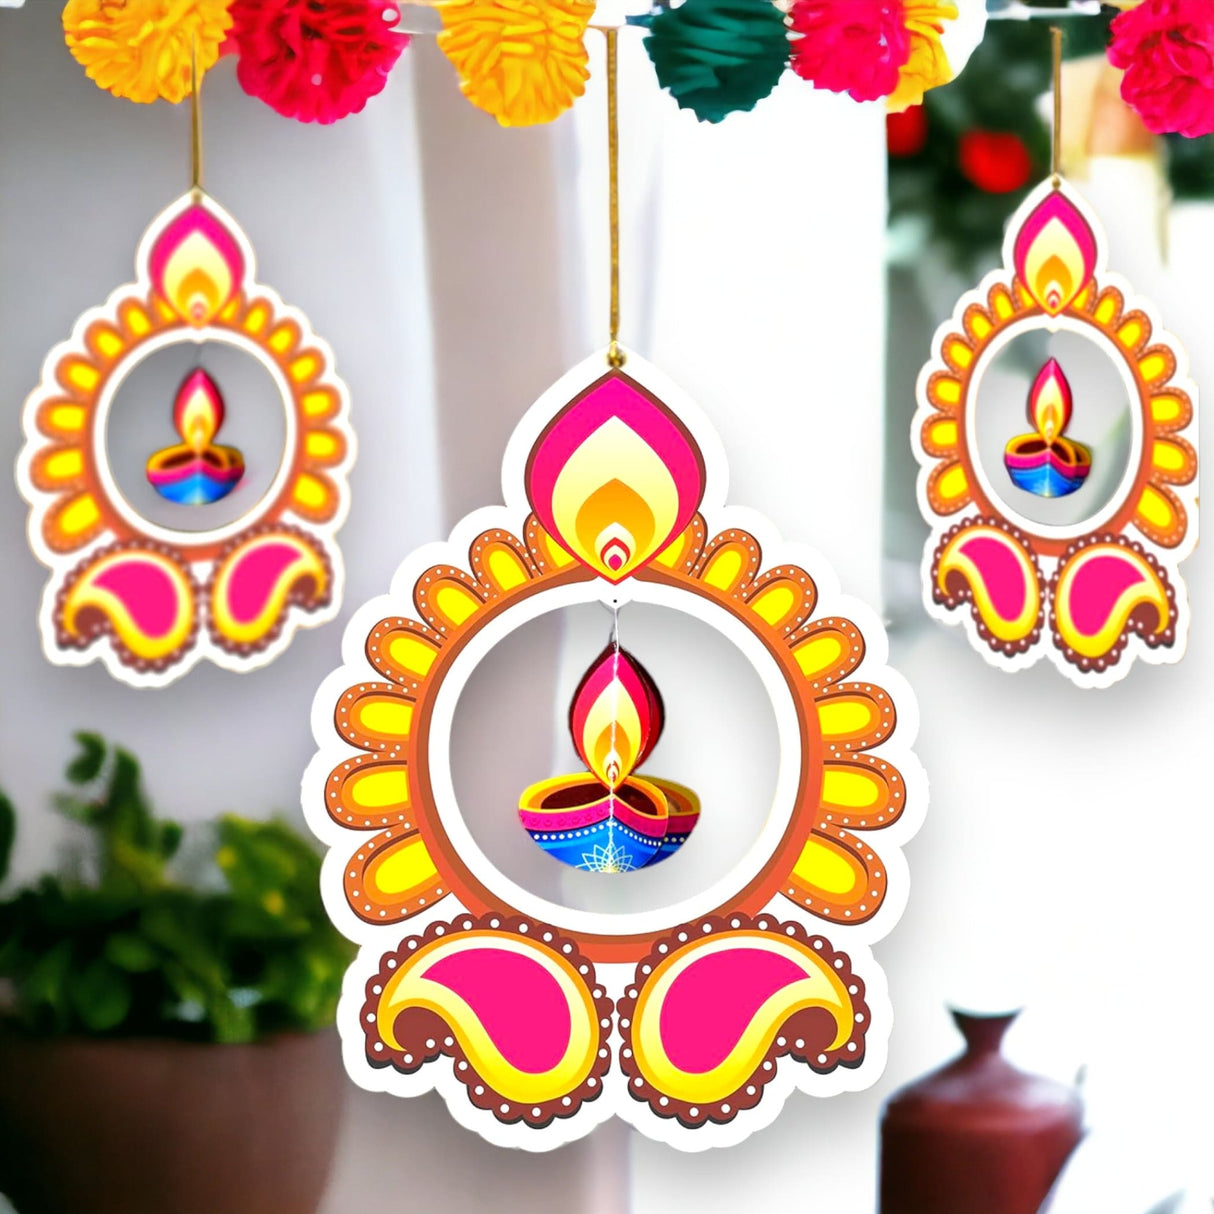 5ct paper hanging rangoli deepak for diwali decoration